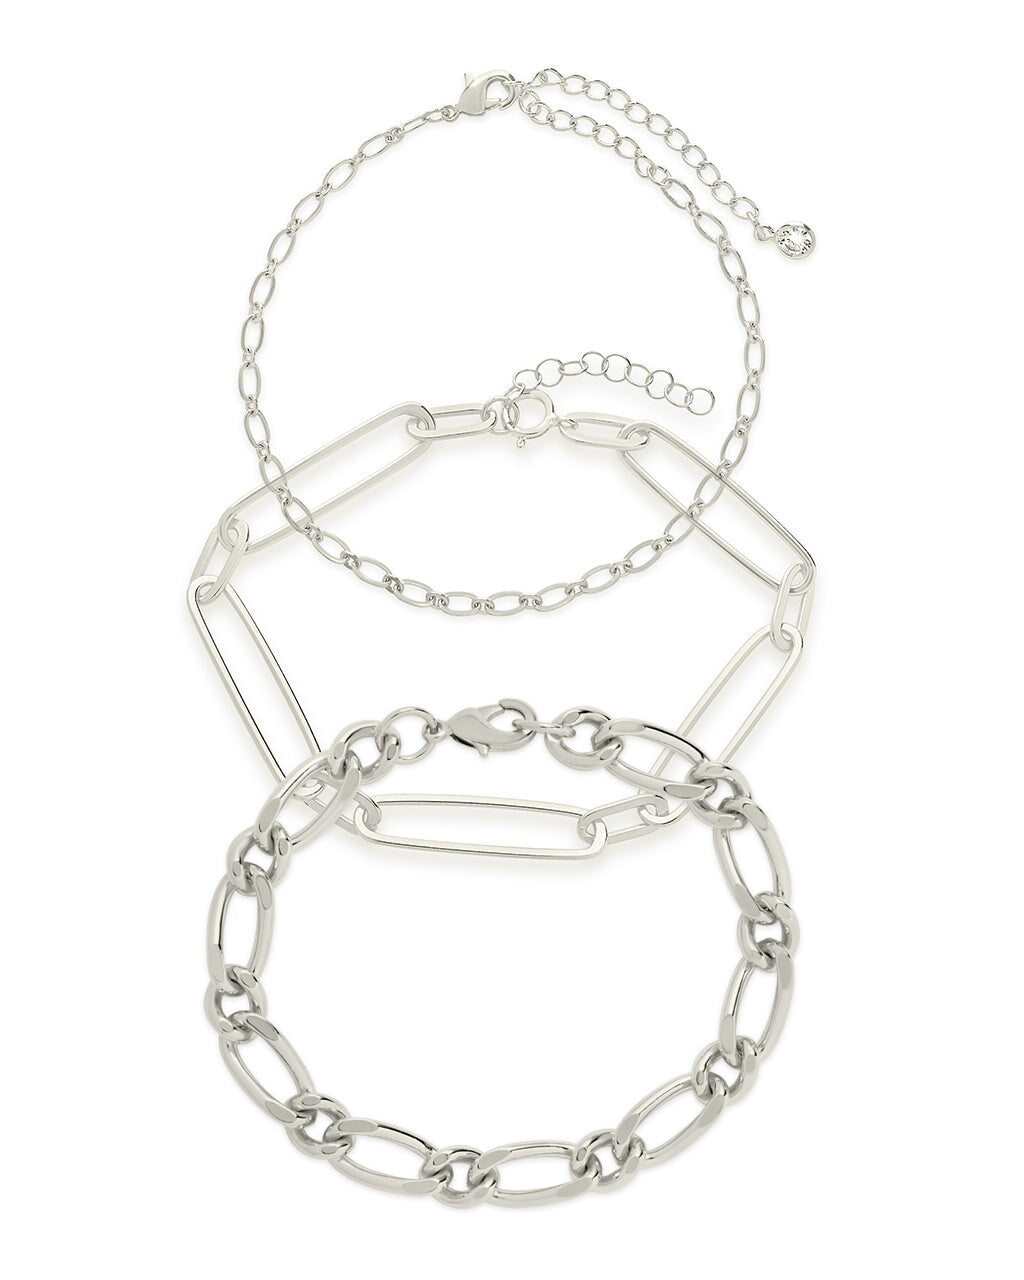 Stacked Chain Bracelet Set of 3 Bracelet Sterling Forever Silver 